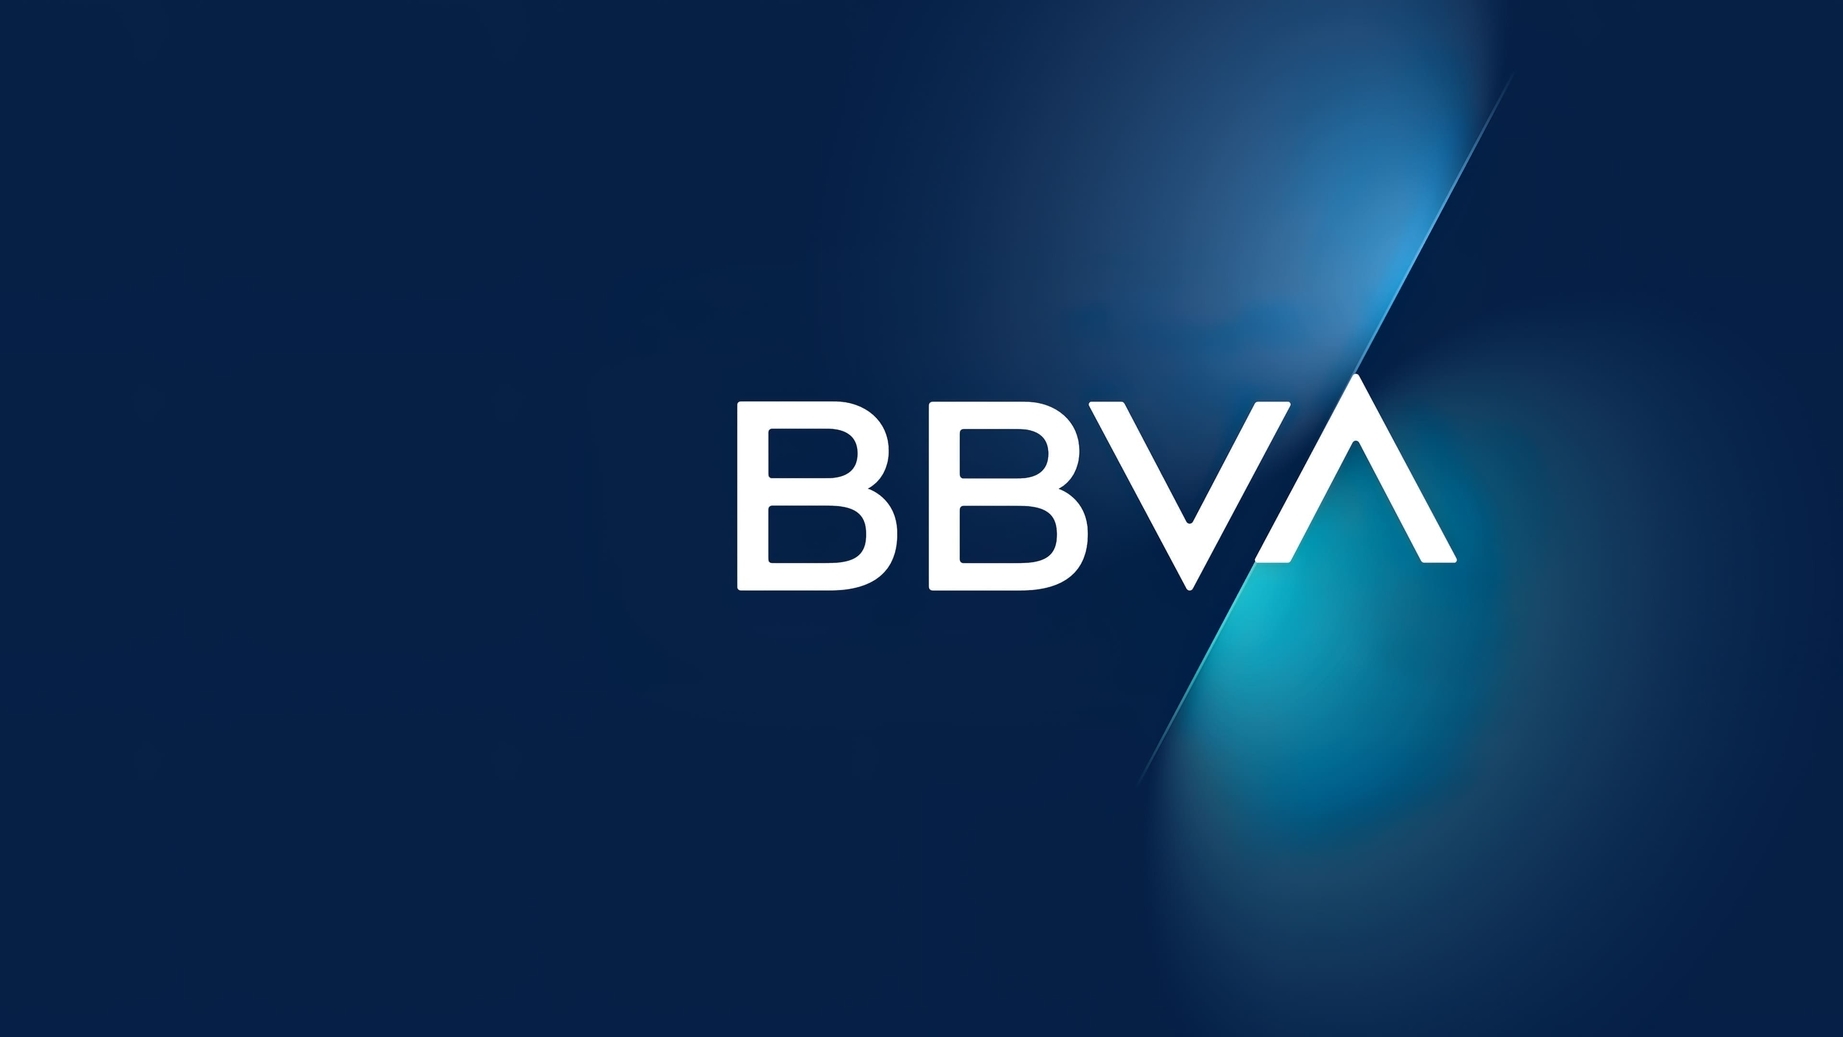 Bbva logo